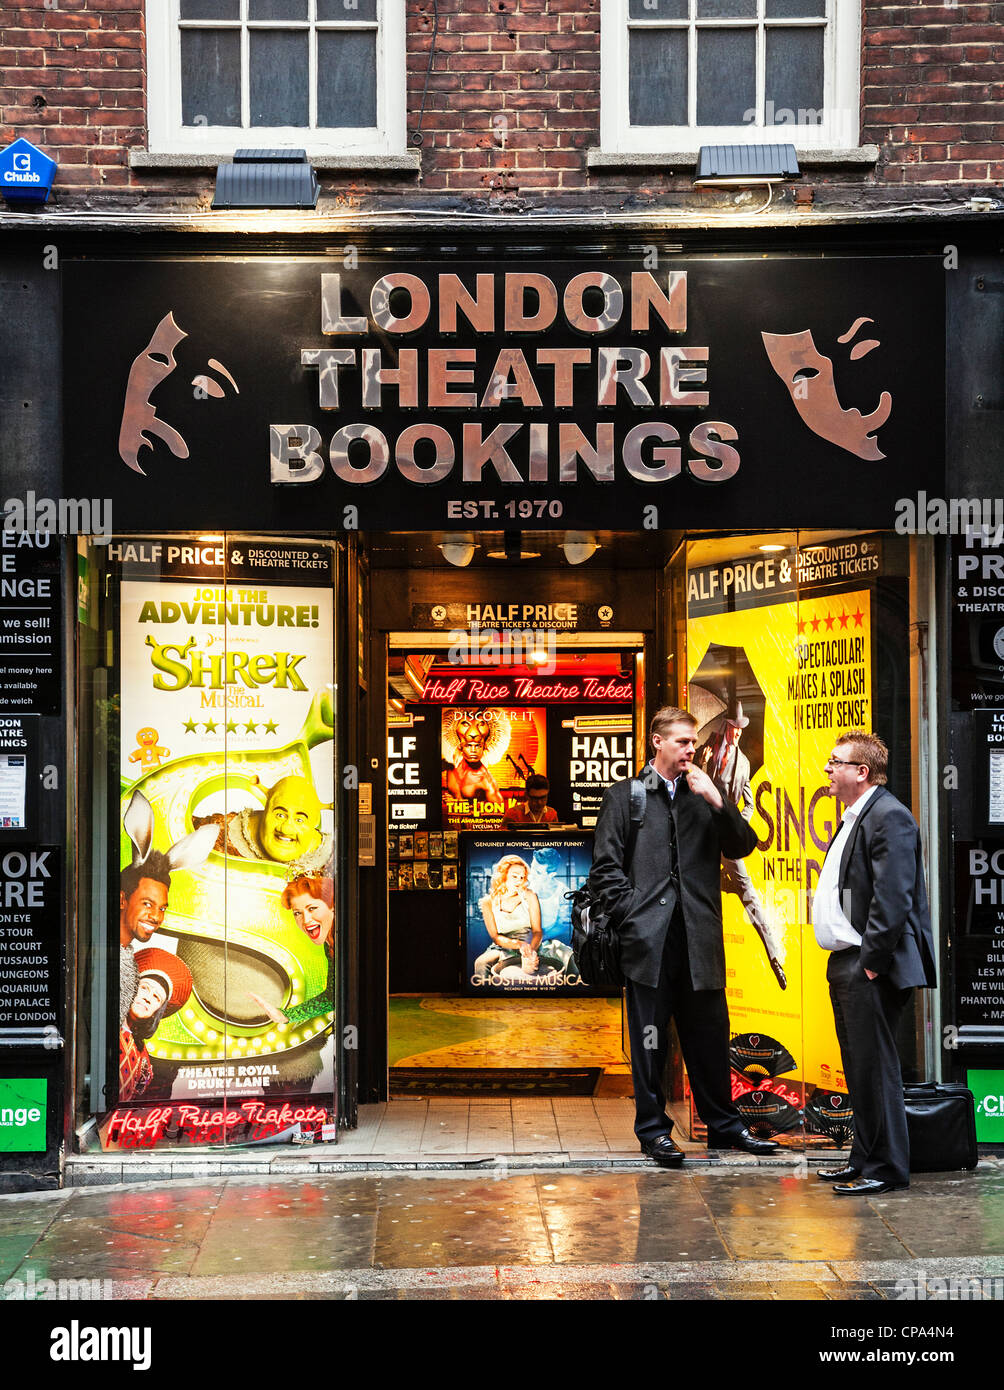 London Theatre Bookings, James Street, Covent Garden, London, England Stock Photo